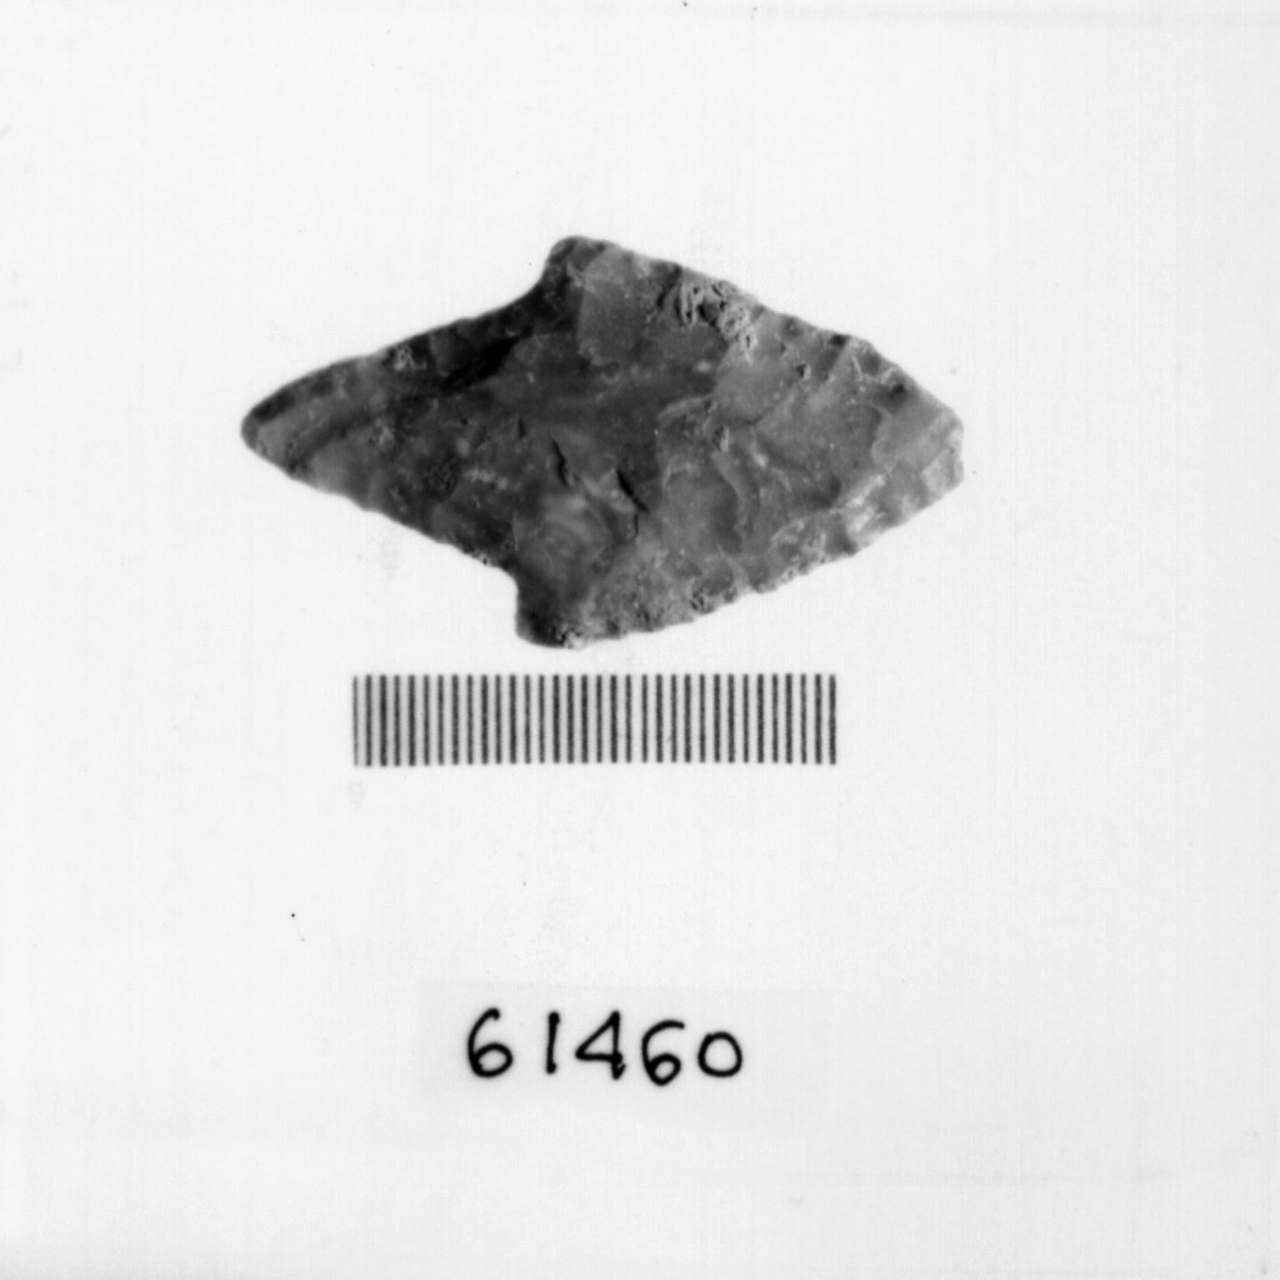 punta foliata peduncolata (Eneolitico)